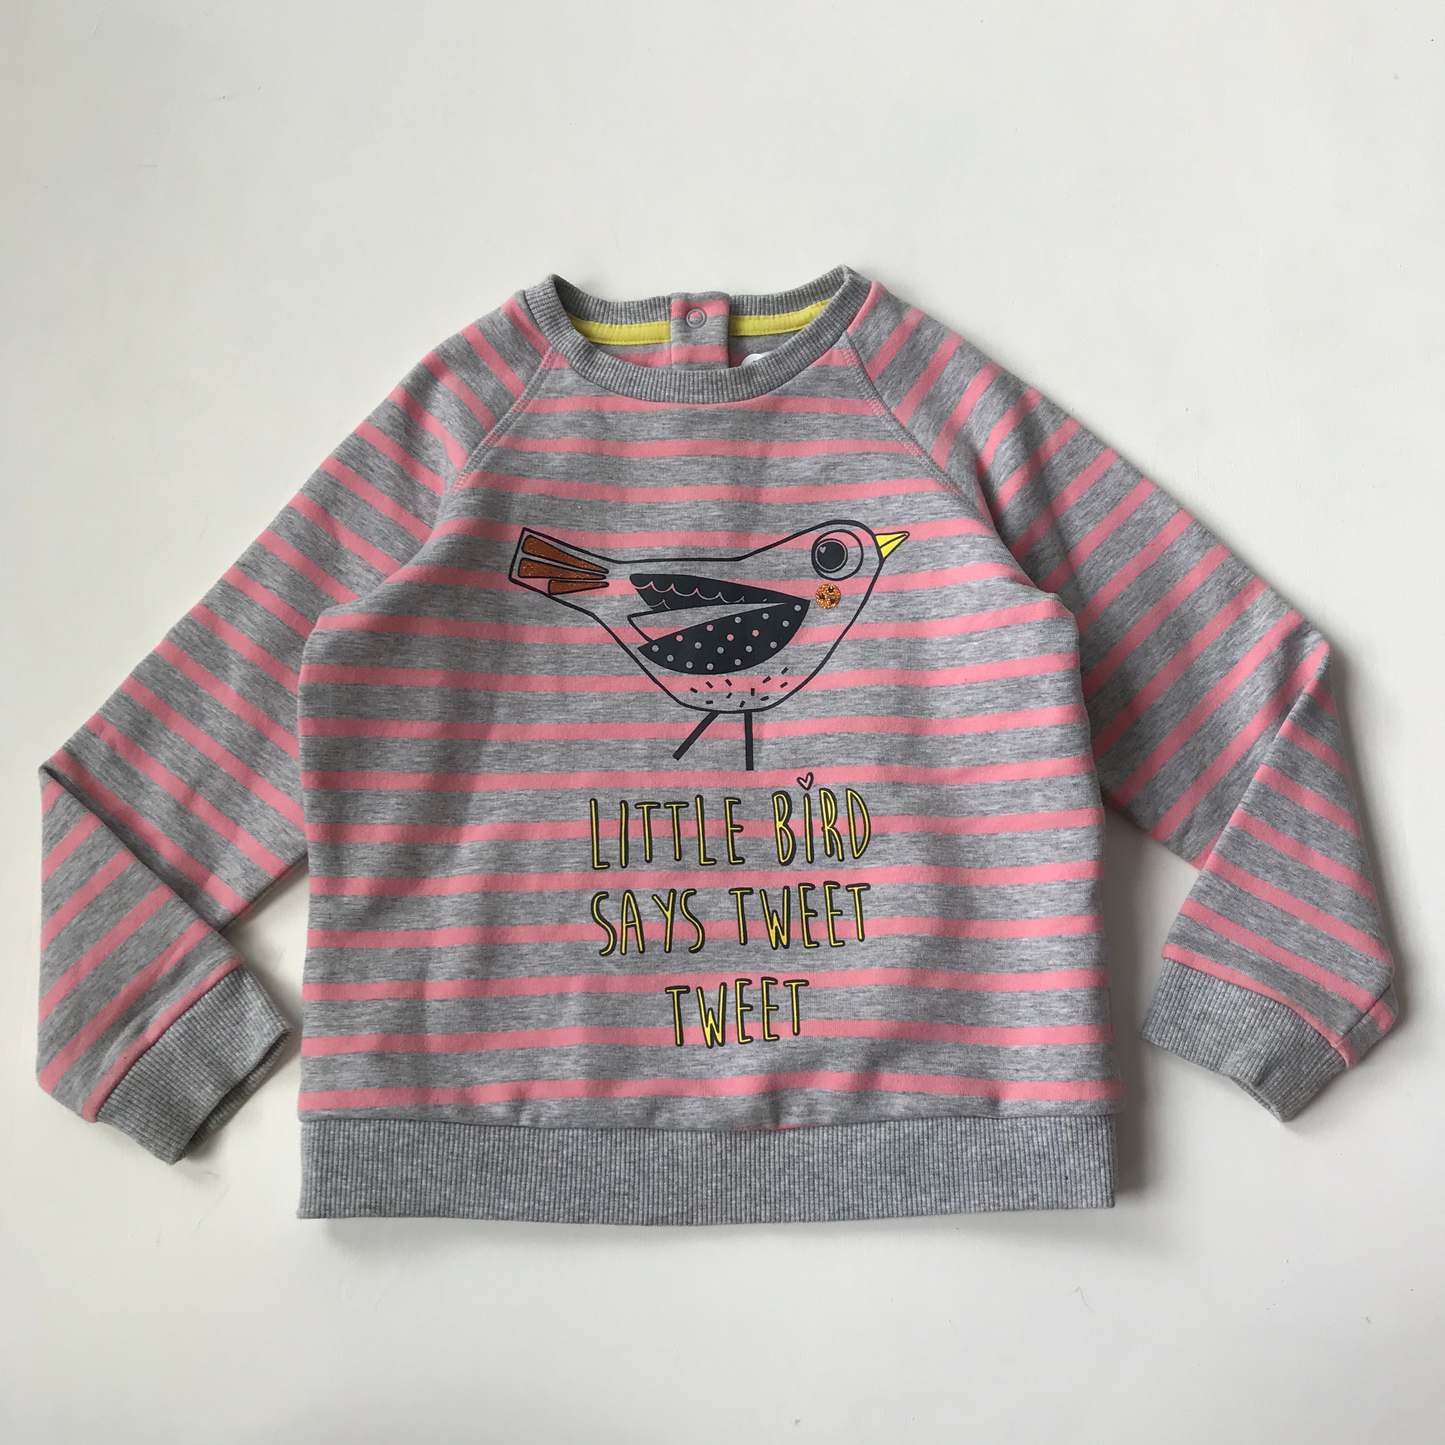 Sweatshirt - 'Little Bird Says Tweet Tweet' - Age 5